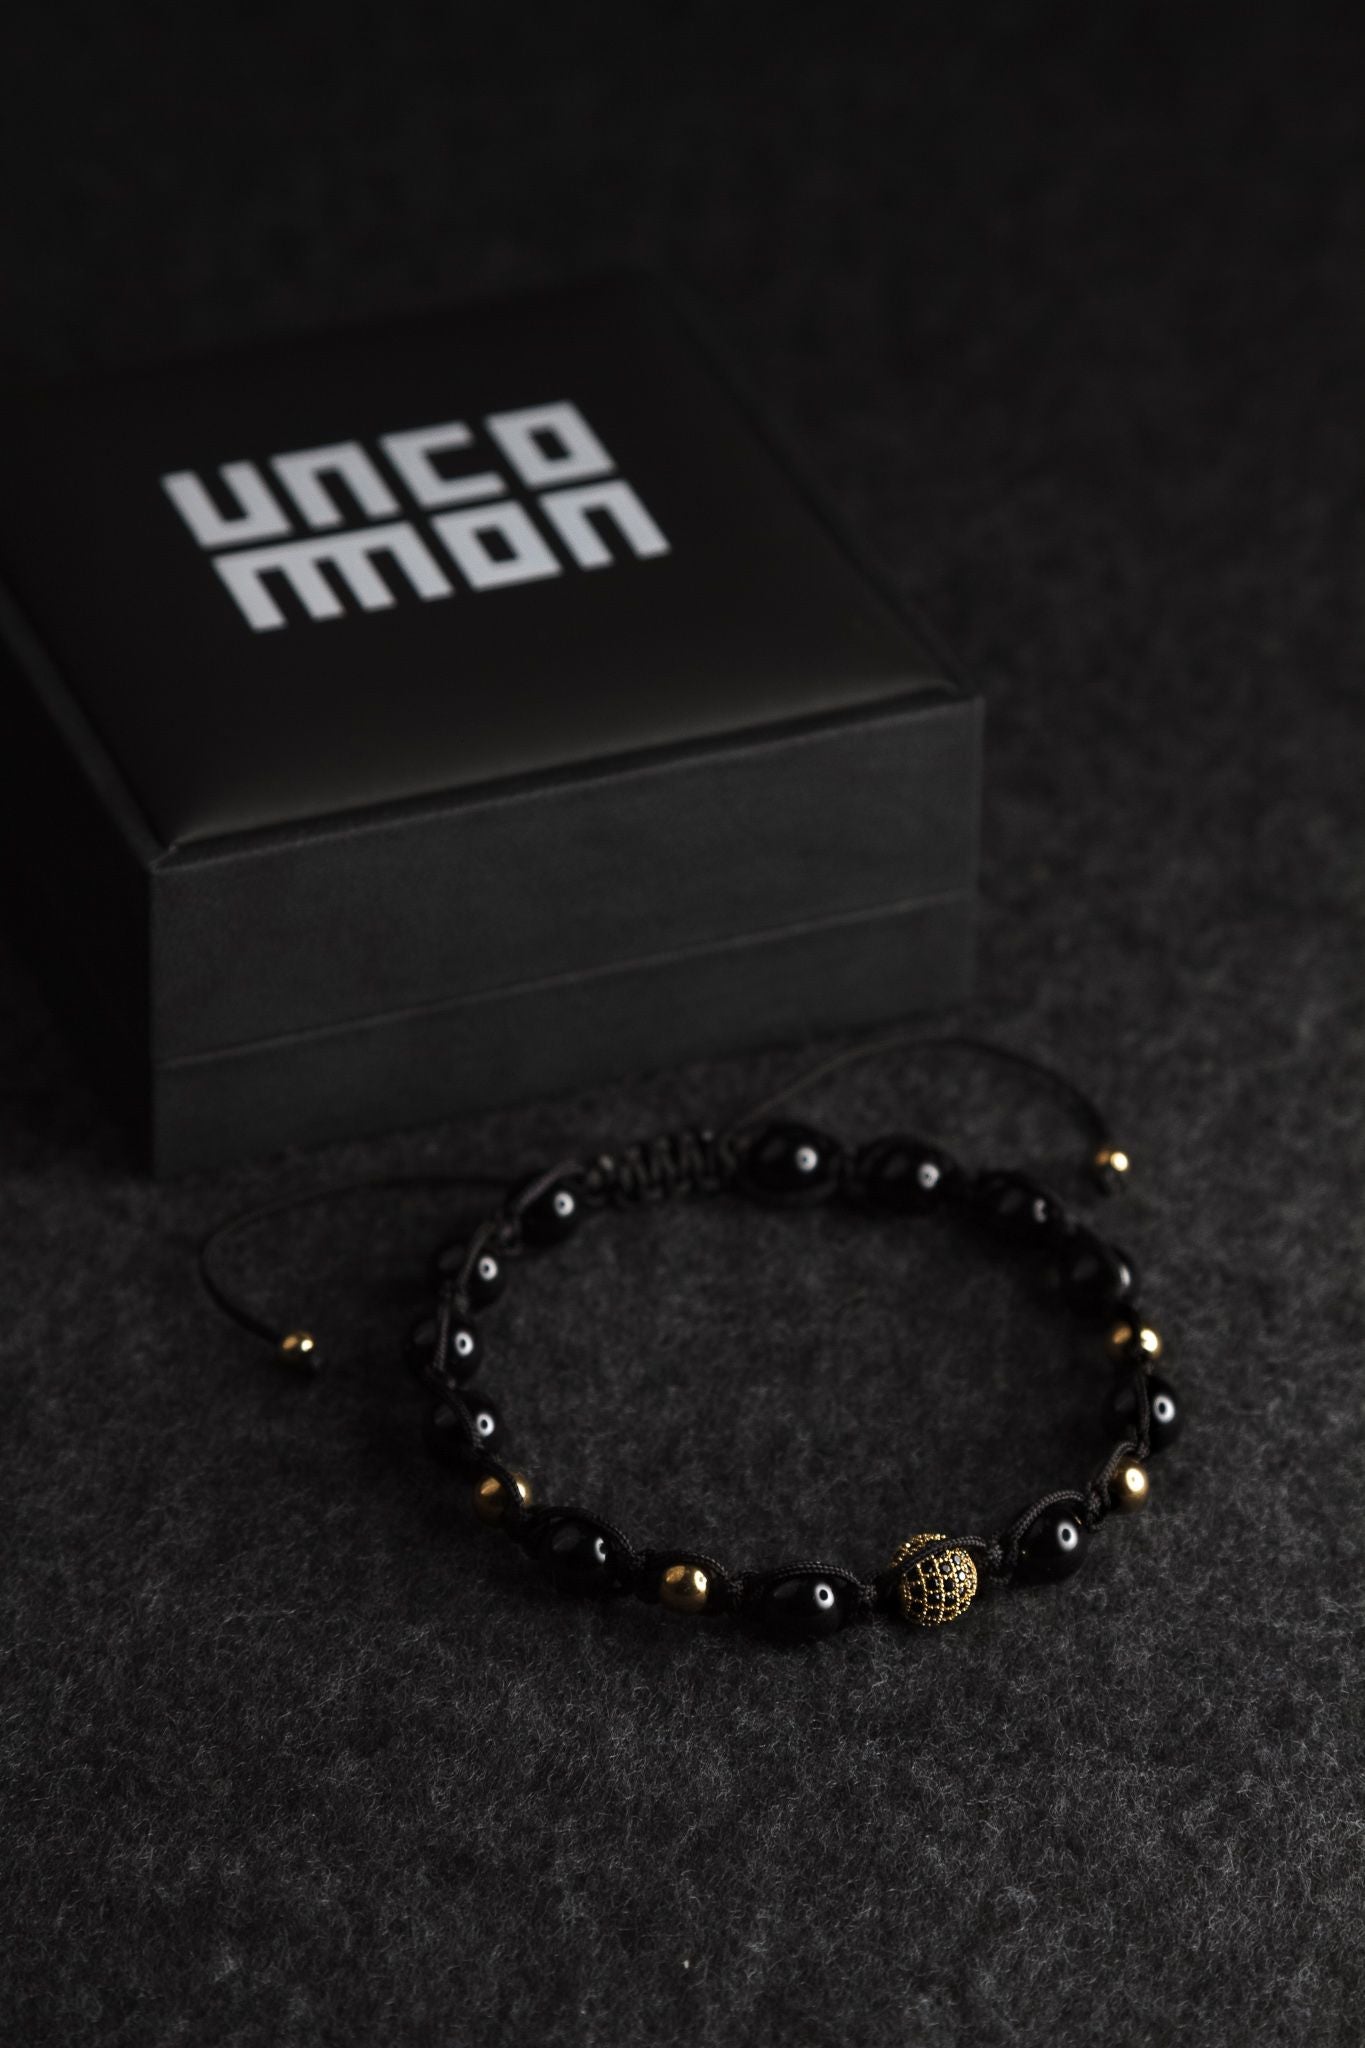 UNCOMMON Men's Beads Bracelet One Gold Jeweled Globe Charm Black Onyx Beads